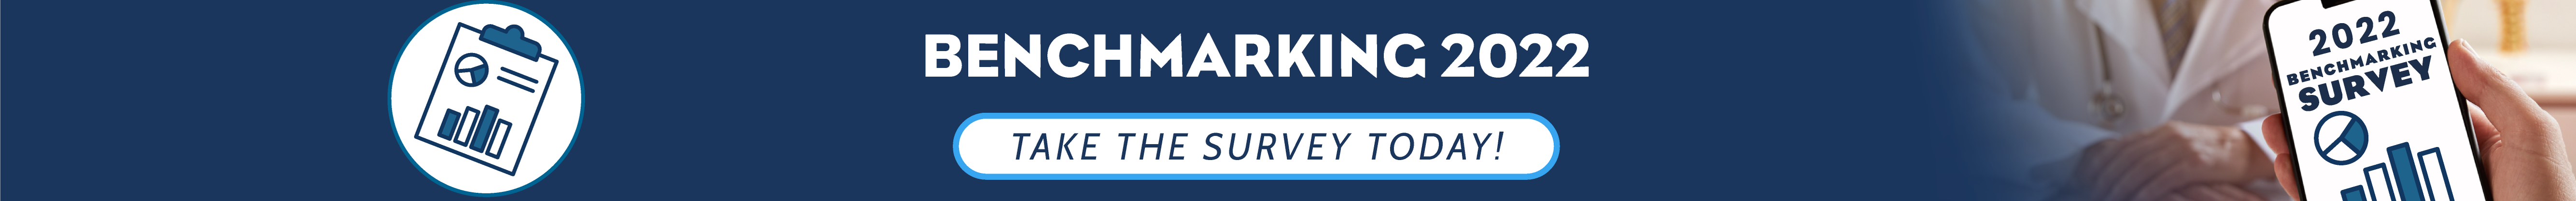 2022 Benchmarking Survey